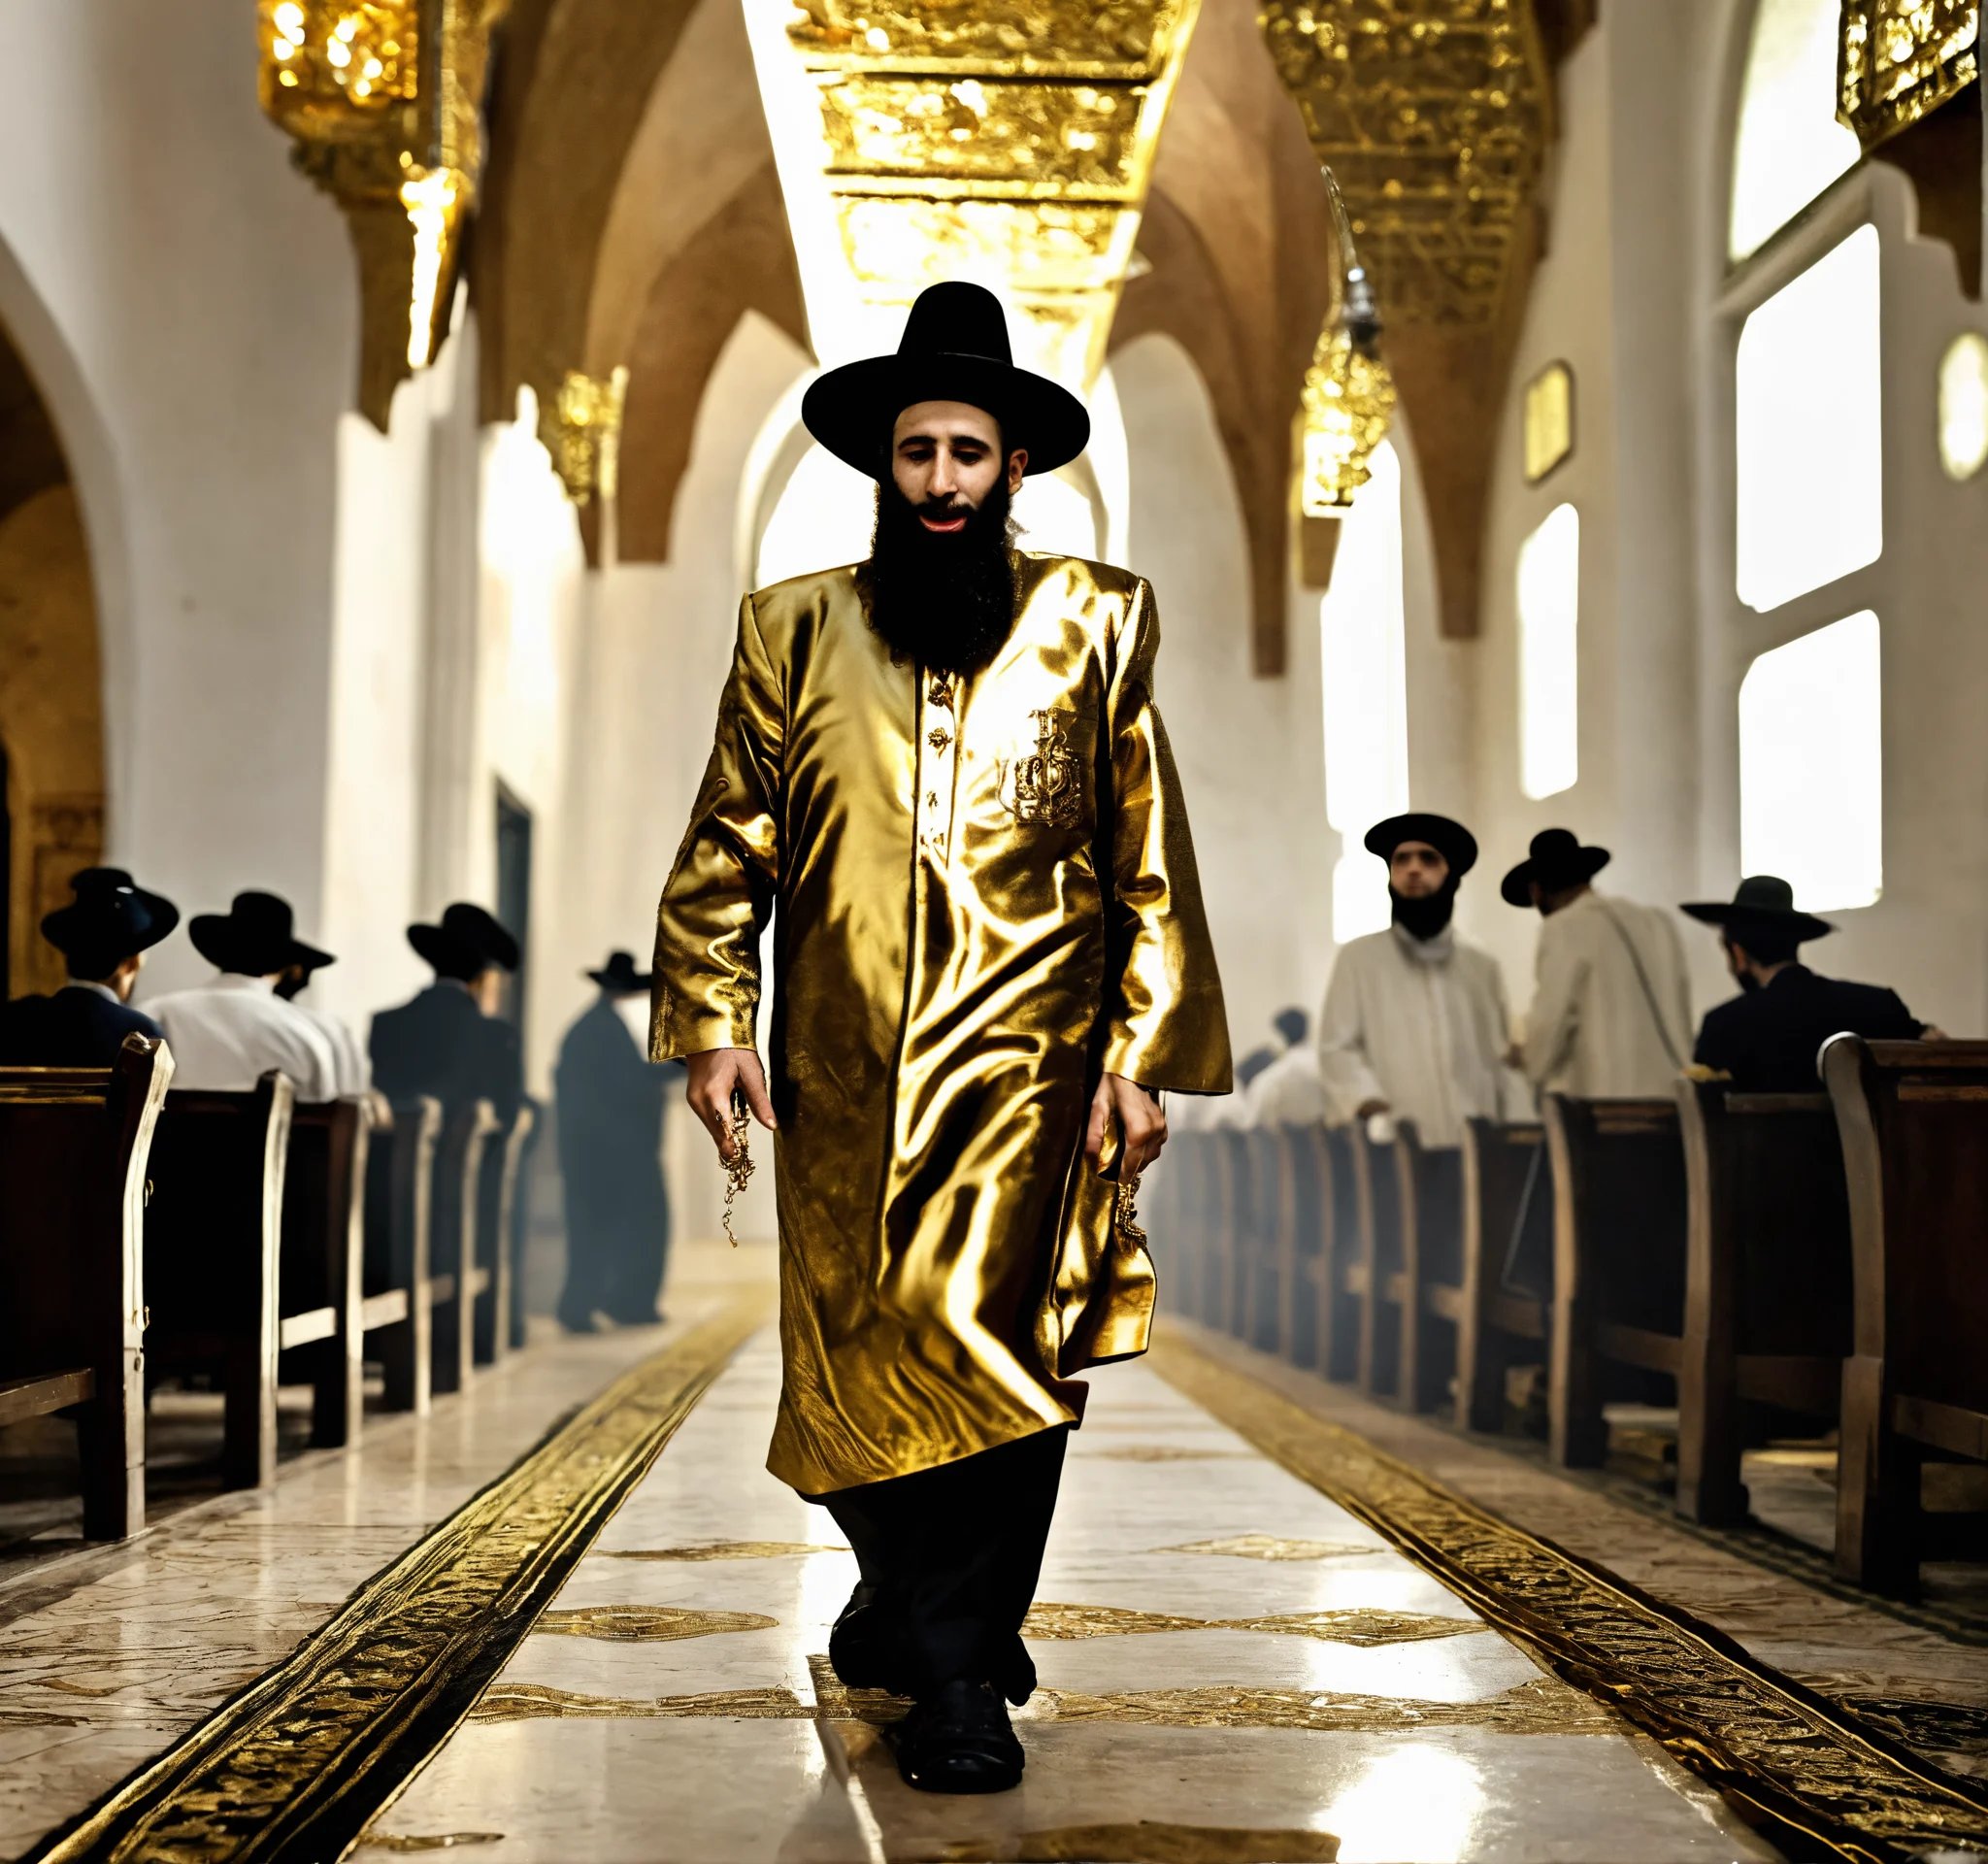 Create a humorous style image of an ultra-Orthodox (1).jpg